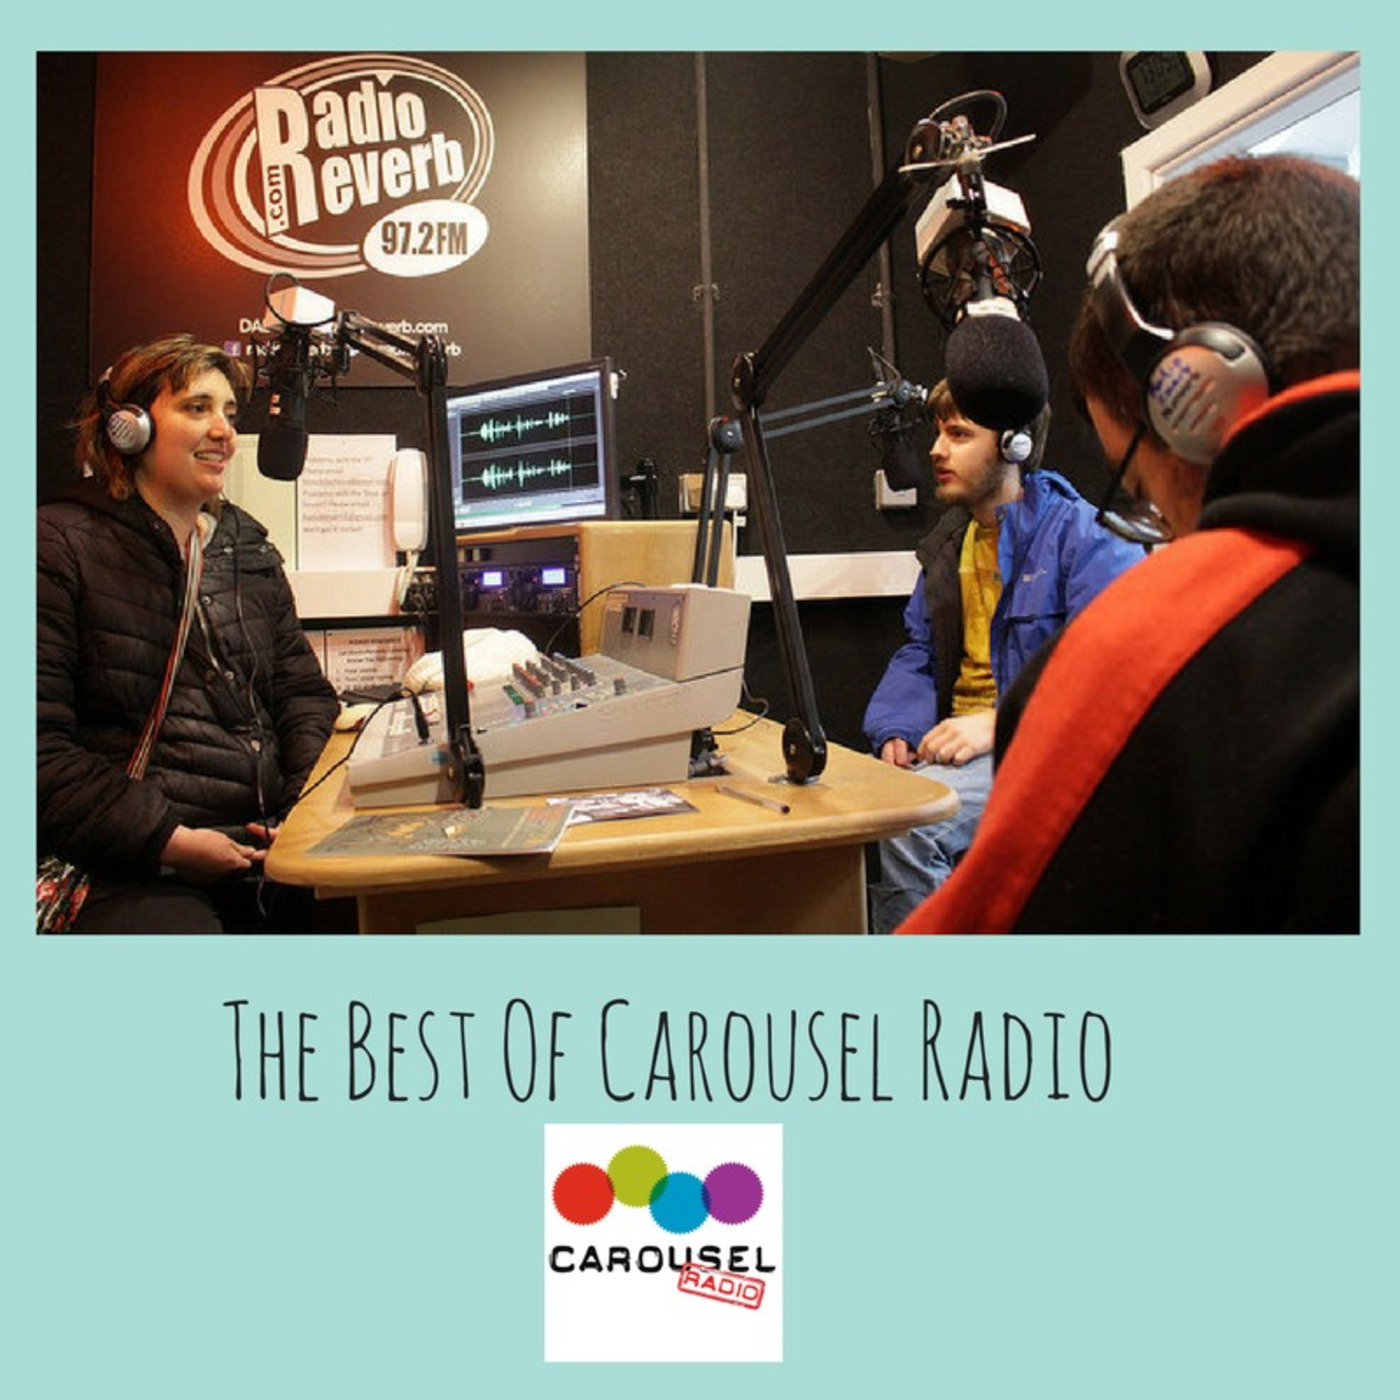 Carousel Radio Presents...The Best of